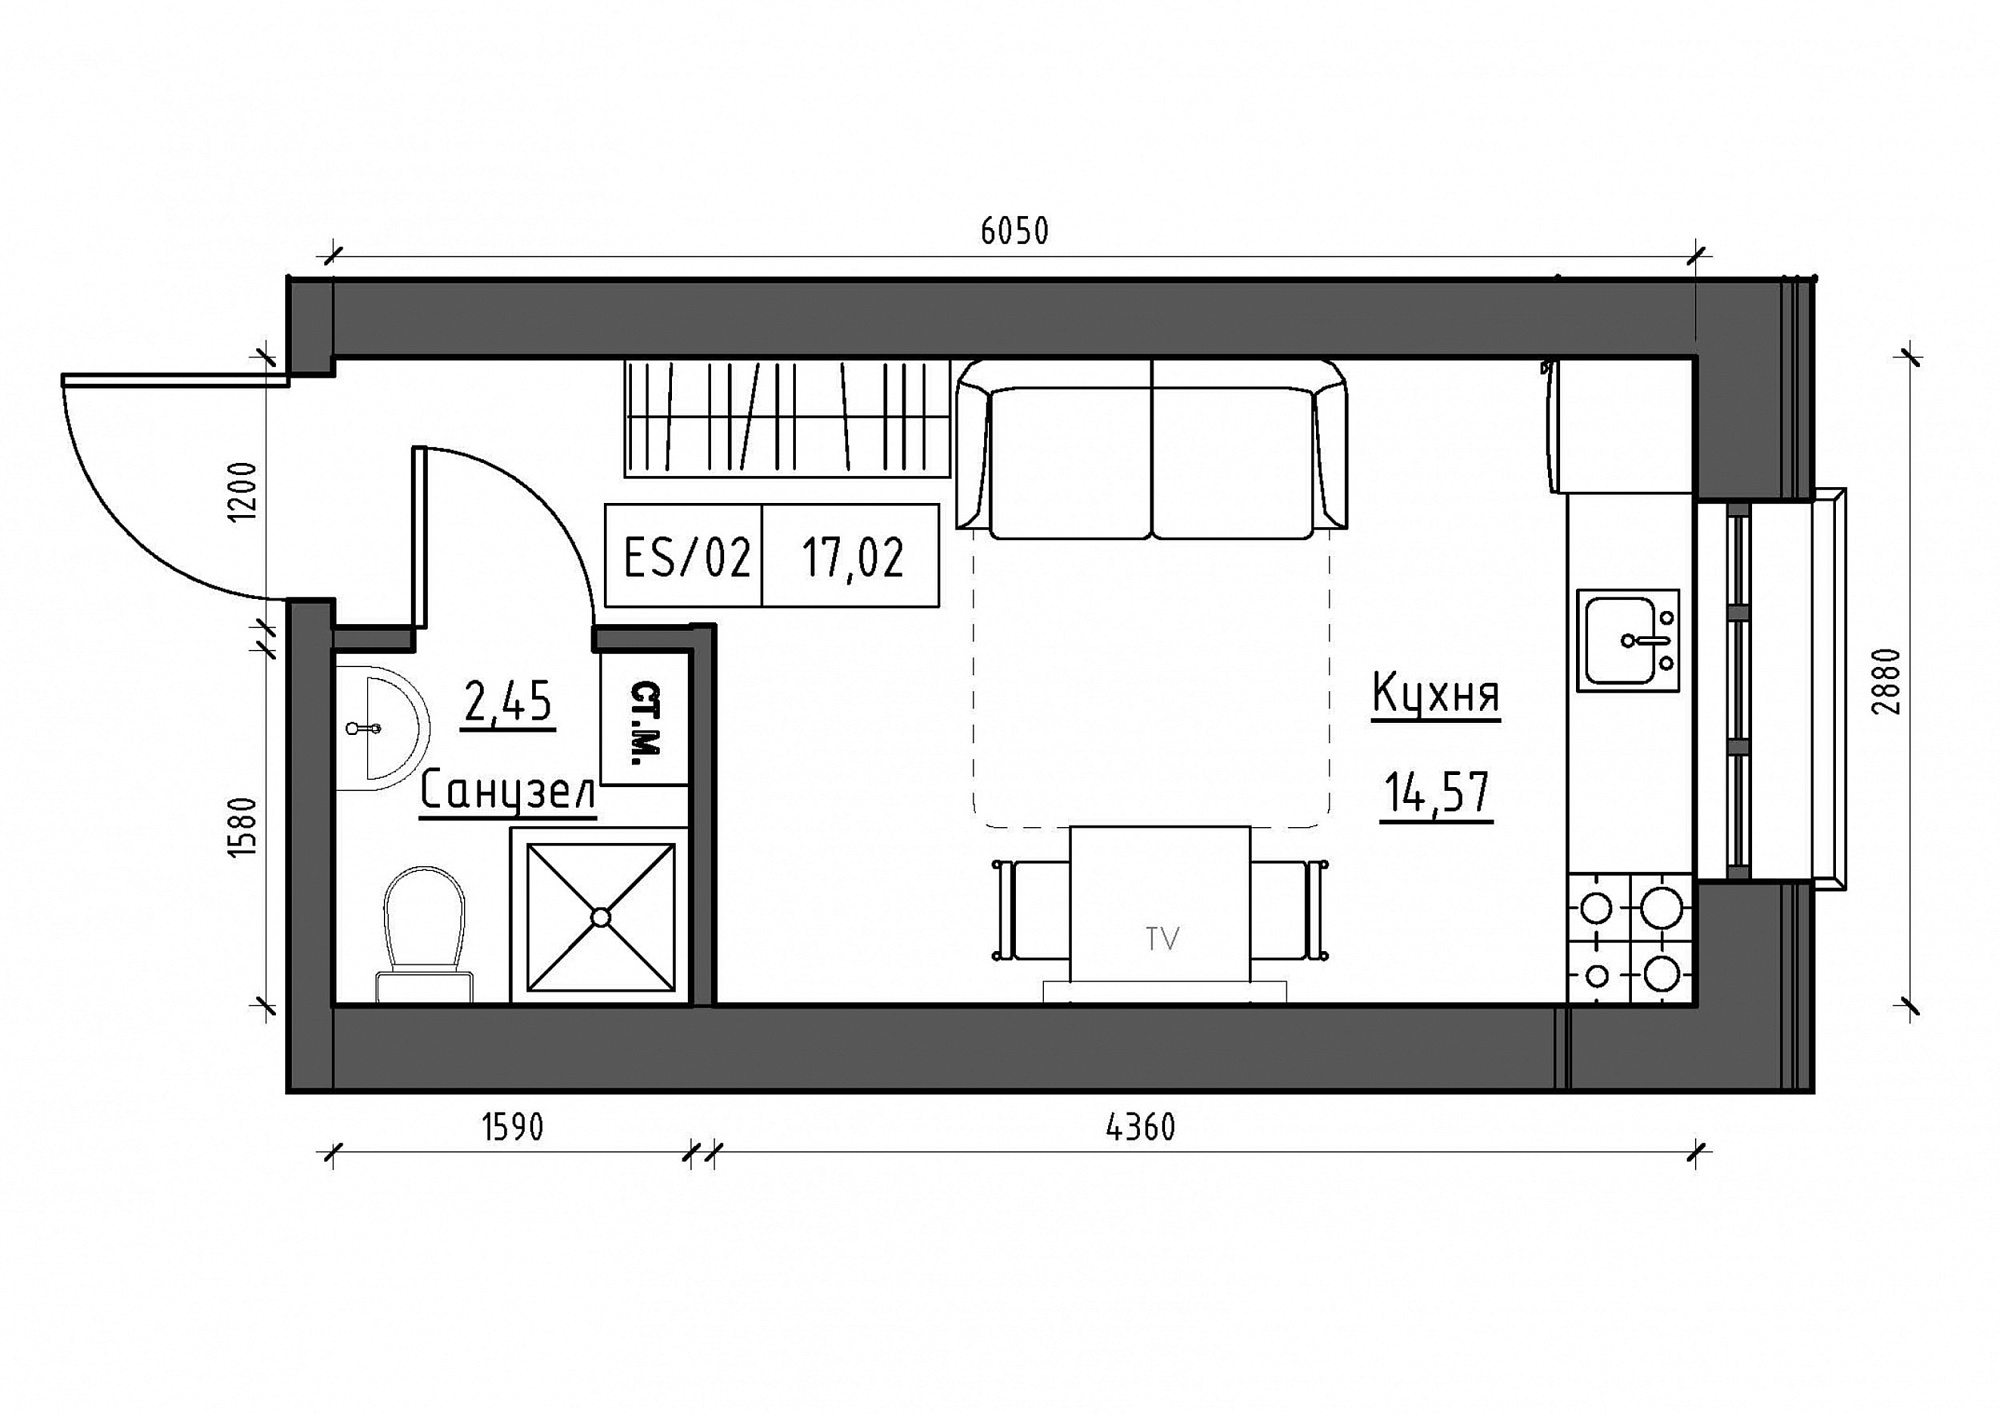 Planning Smart flats area 17.02m2, KS-012-04/0014.